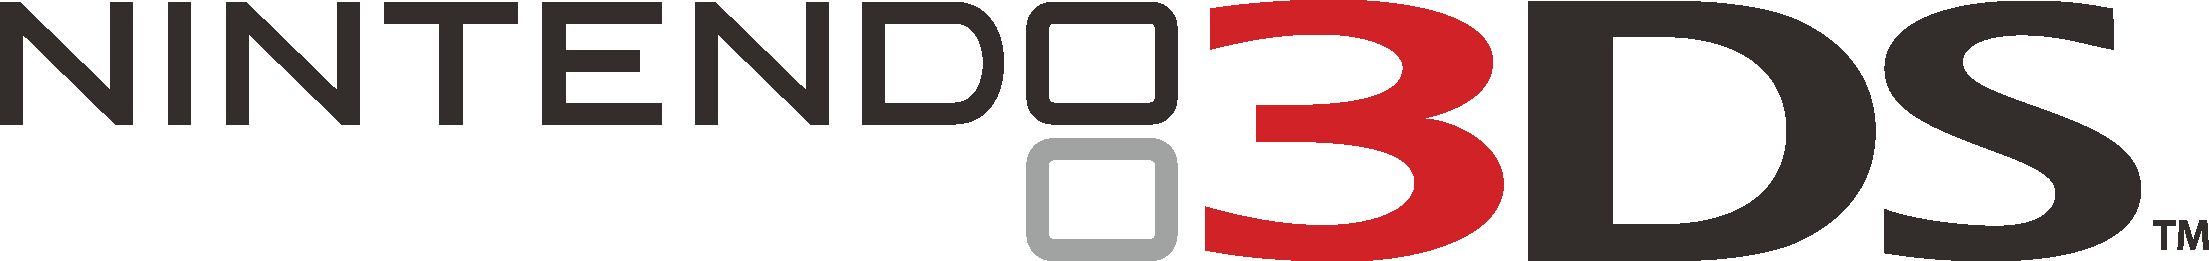 Nintendo 3DS Logo png